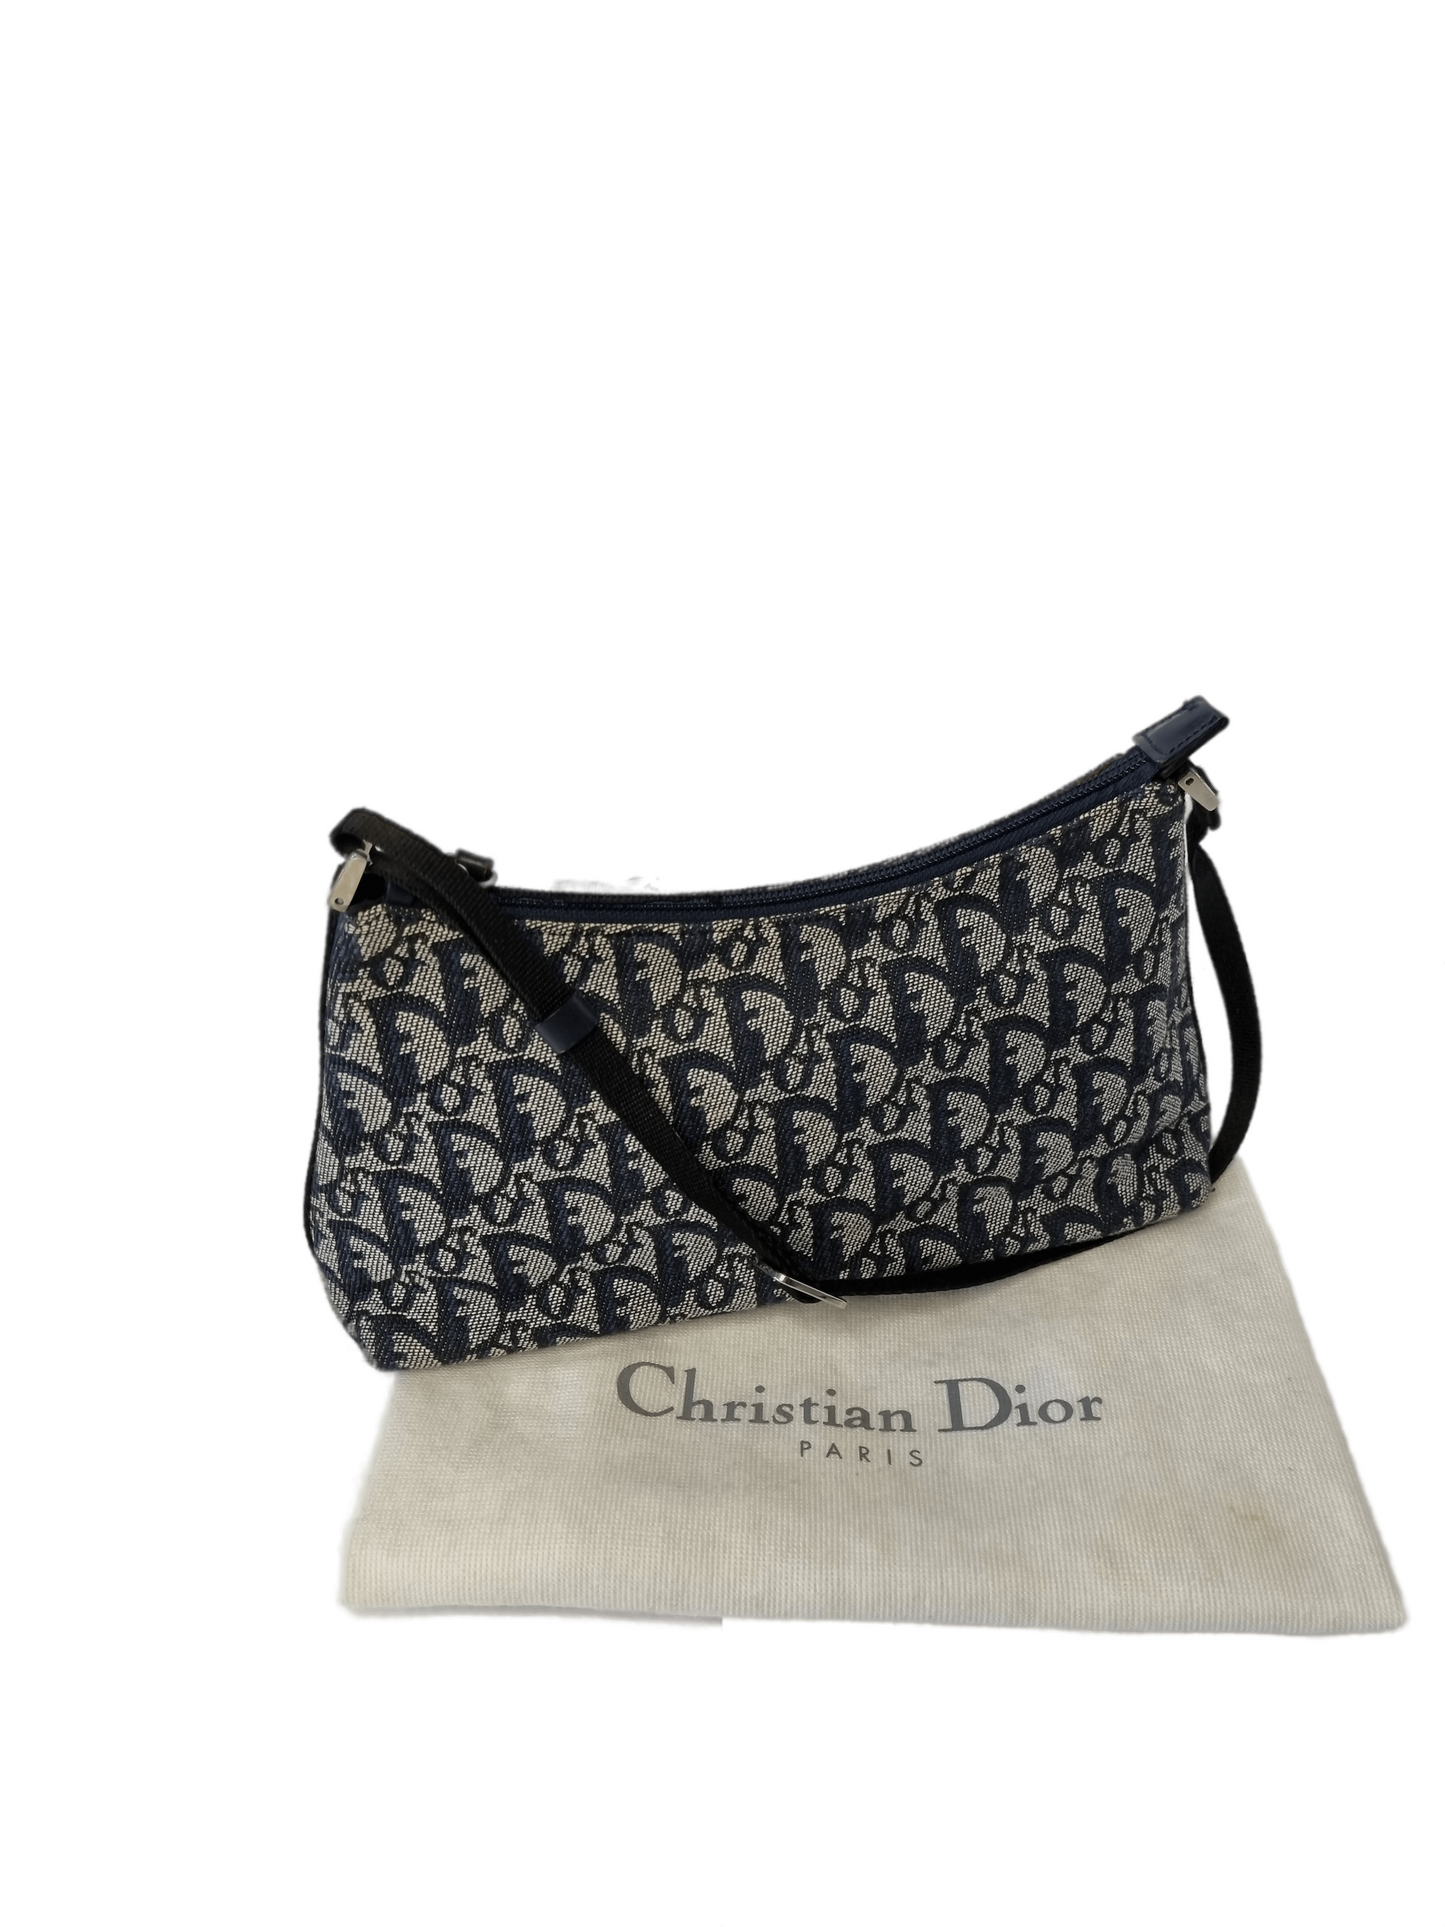 Christian Dior Trotter Bag